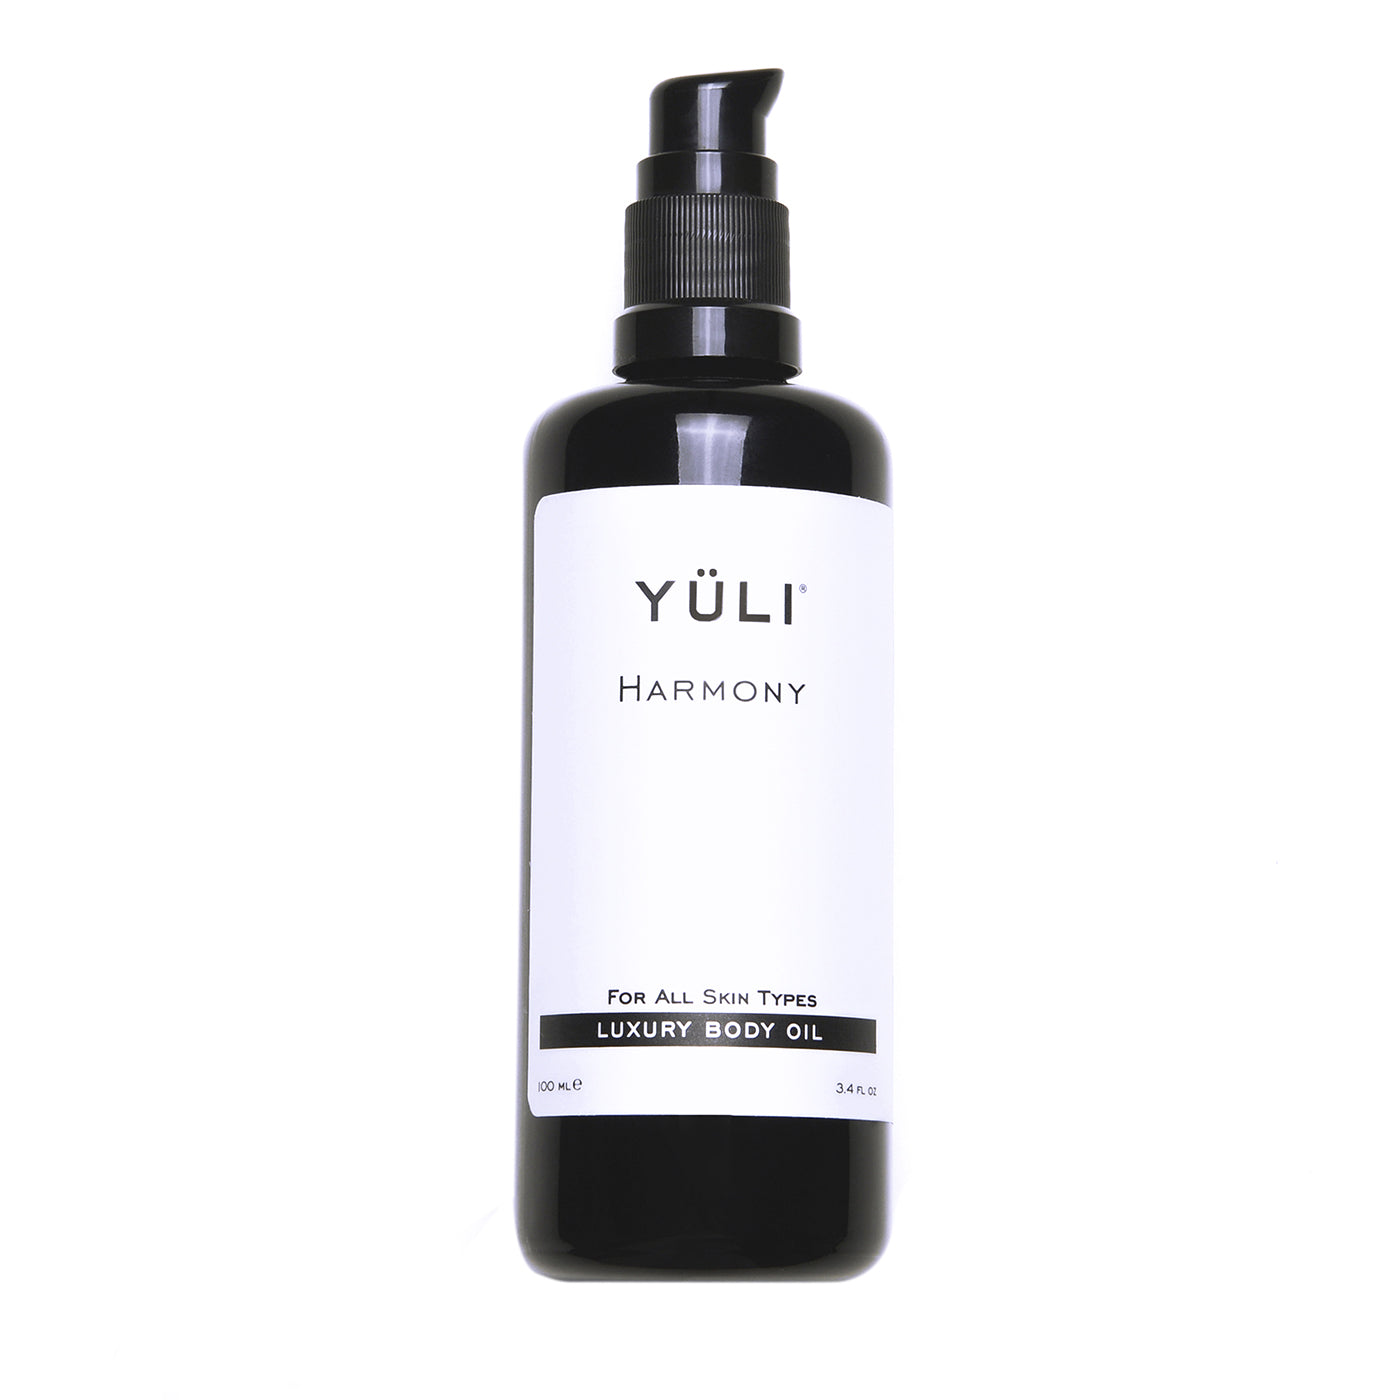 YULI Harmony Body Oil